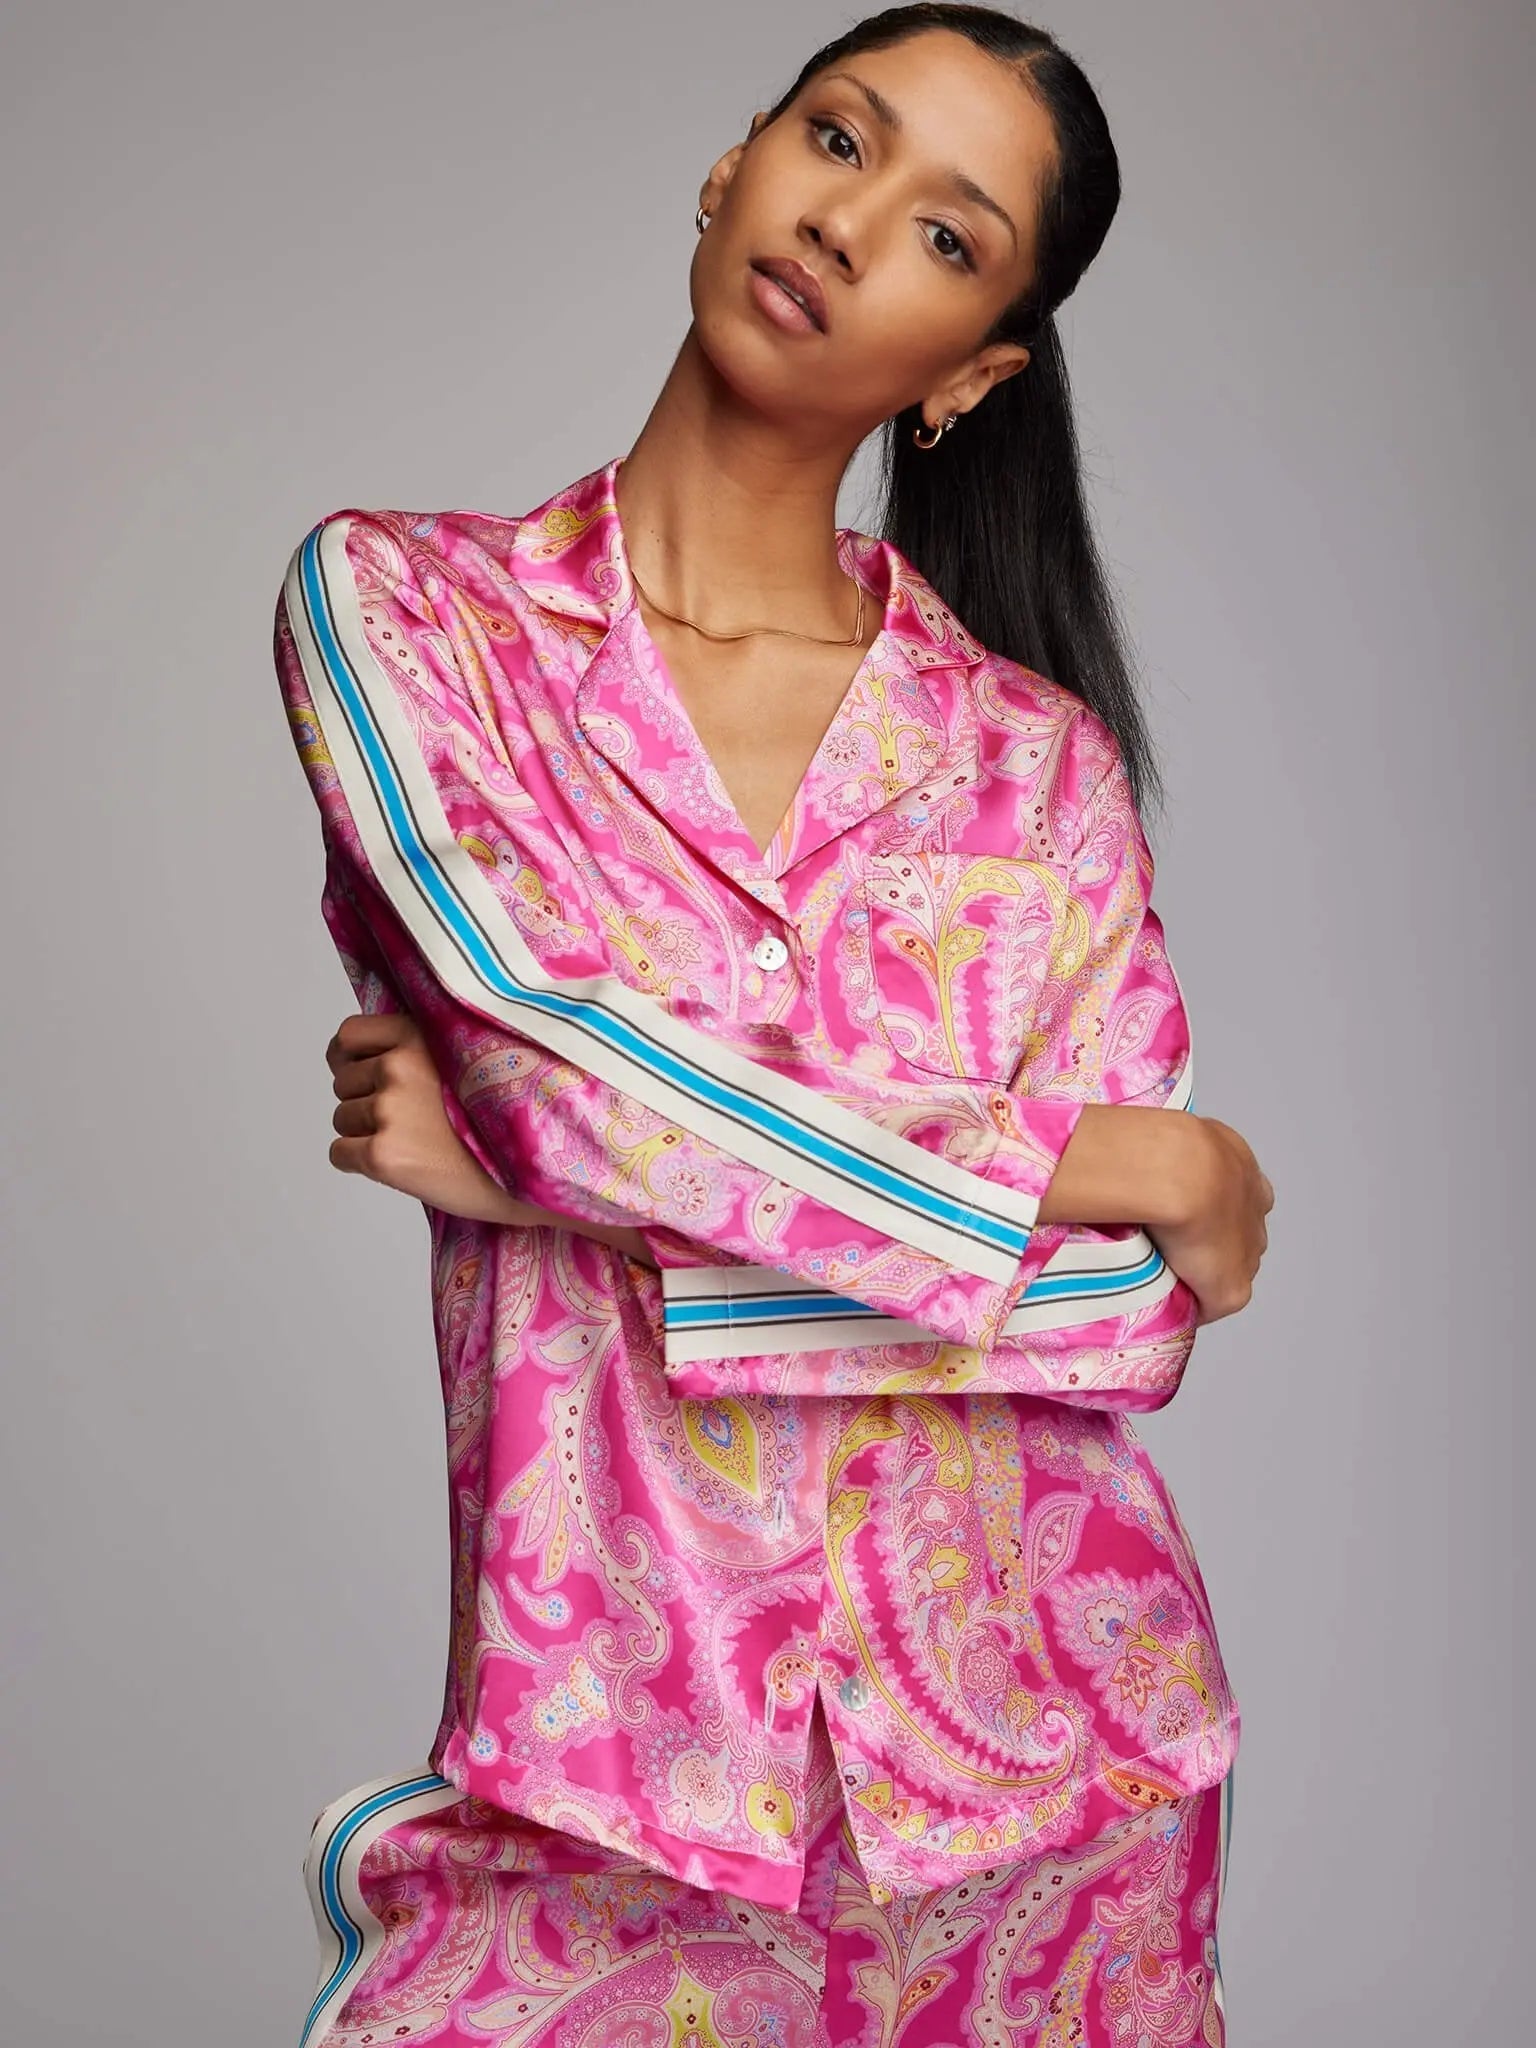 Satin Pajamas, Women's Satin Sleepwear